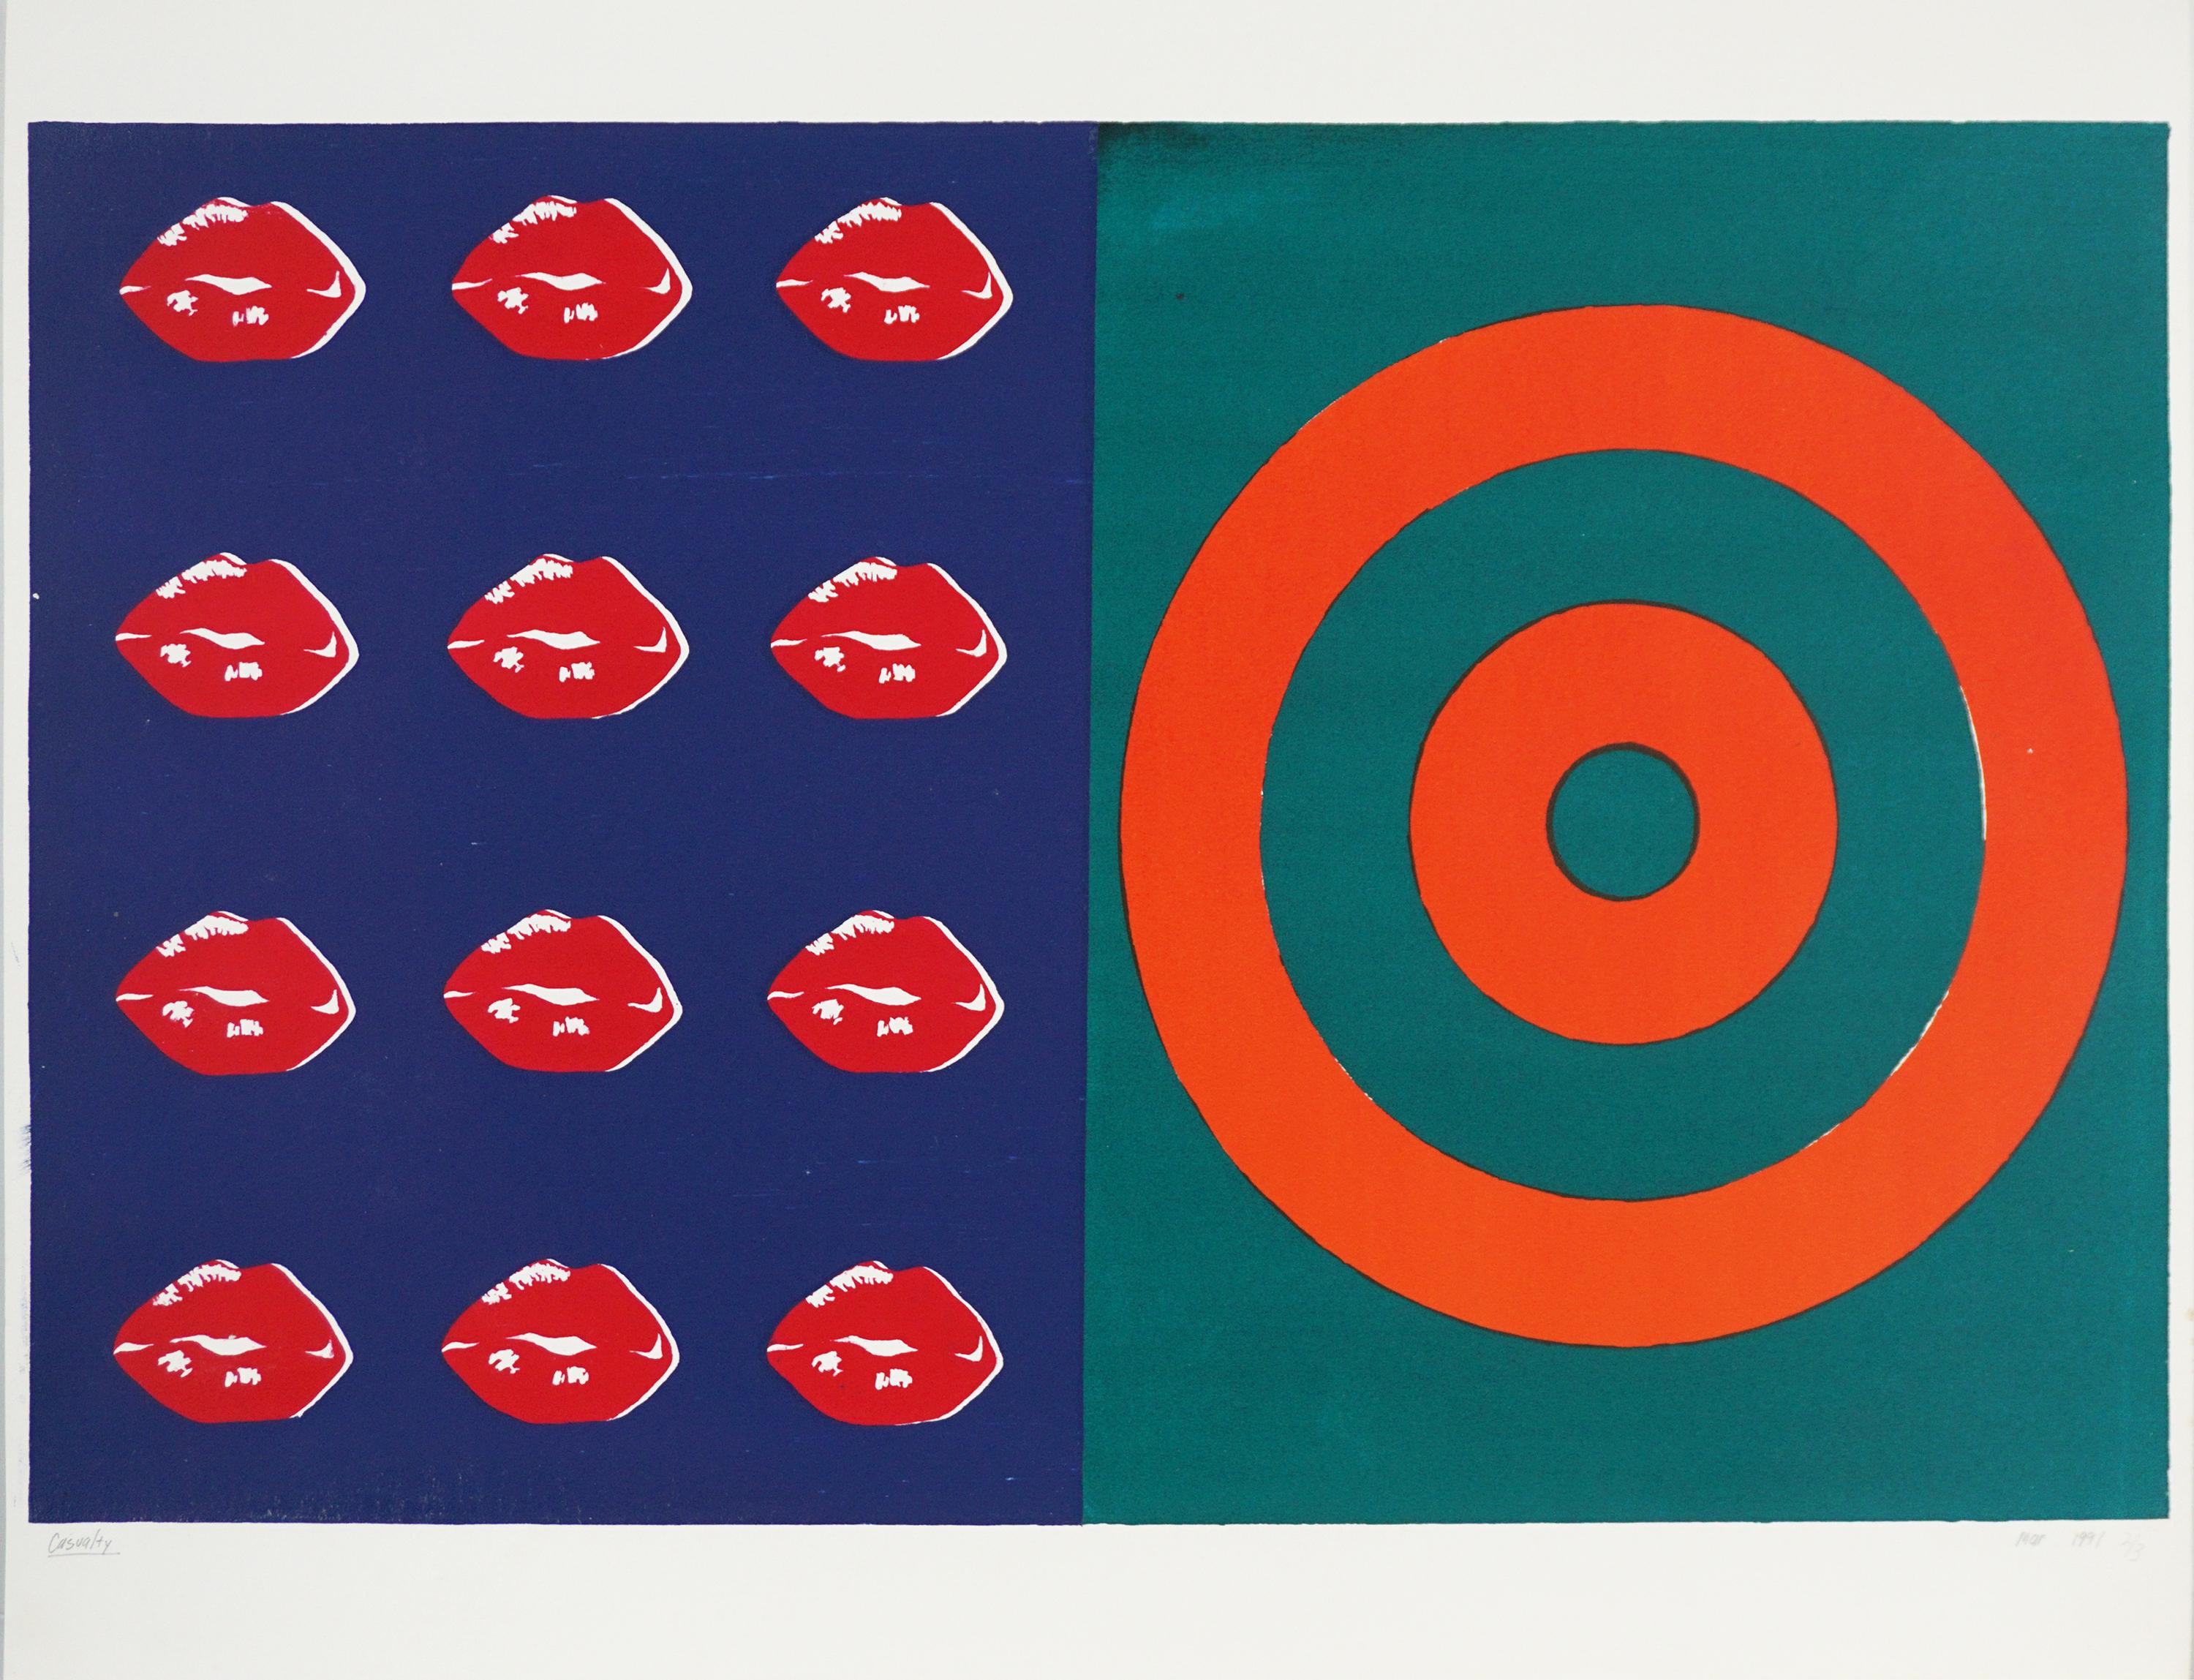 David Mar Abstract Print - "Casualty" Pop Art Homage to Andy Warhol Silkscreen 3/3